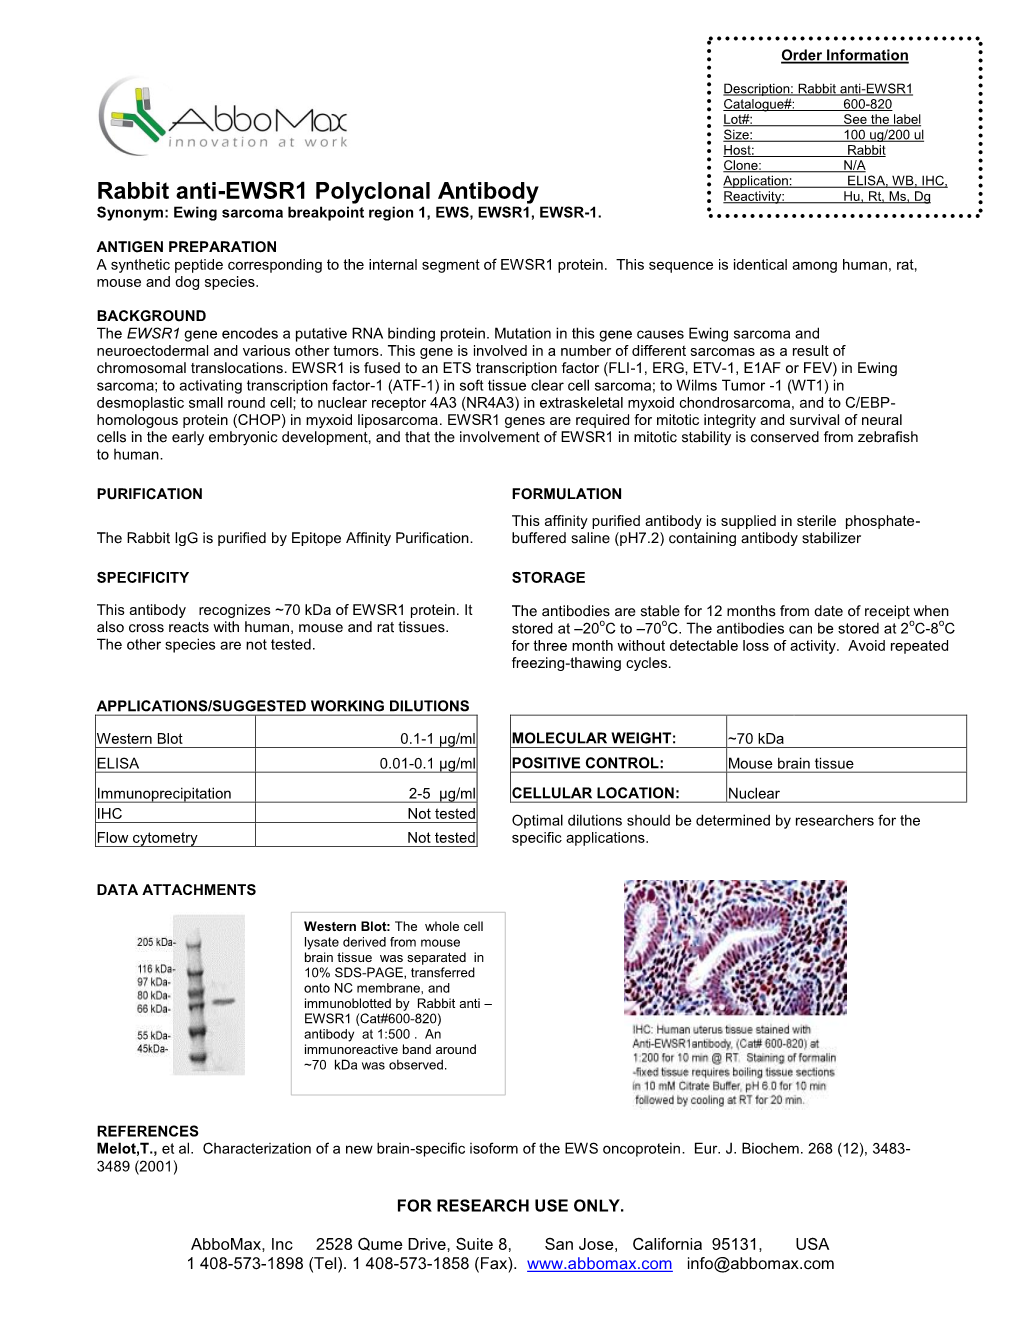 Rabbit Anti-EWSR1 Polyclonal Antibody Reactivity: Hu, Rt, Ms, Dg Synonym: Ewing Sarcoma Breakpoint Region 1, EWS, EWSR1, EWSR-1